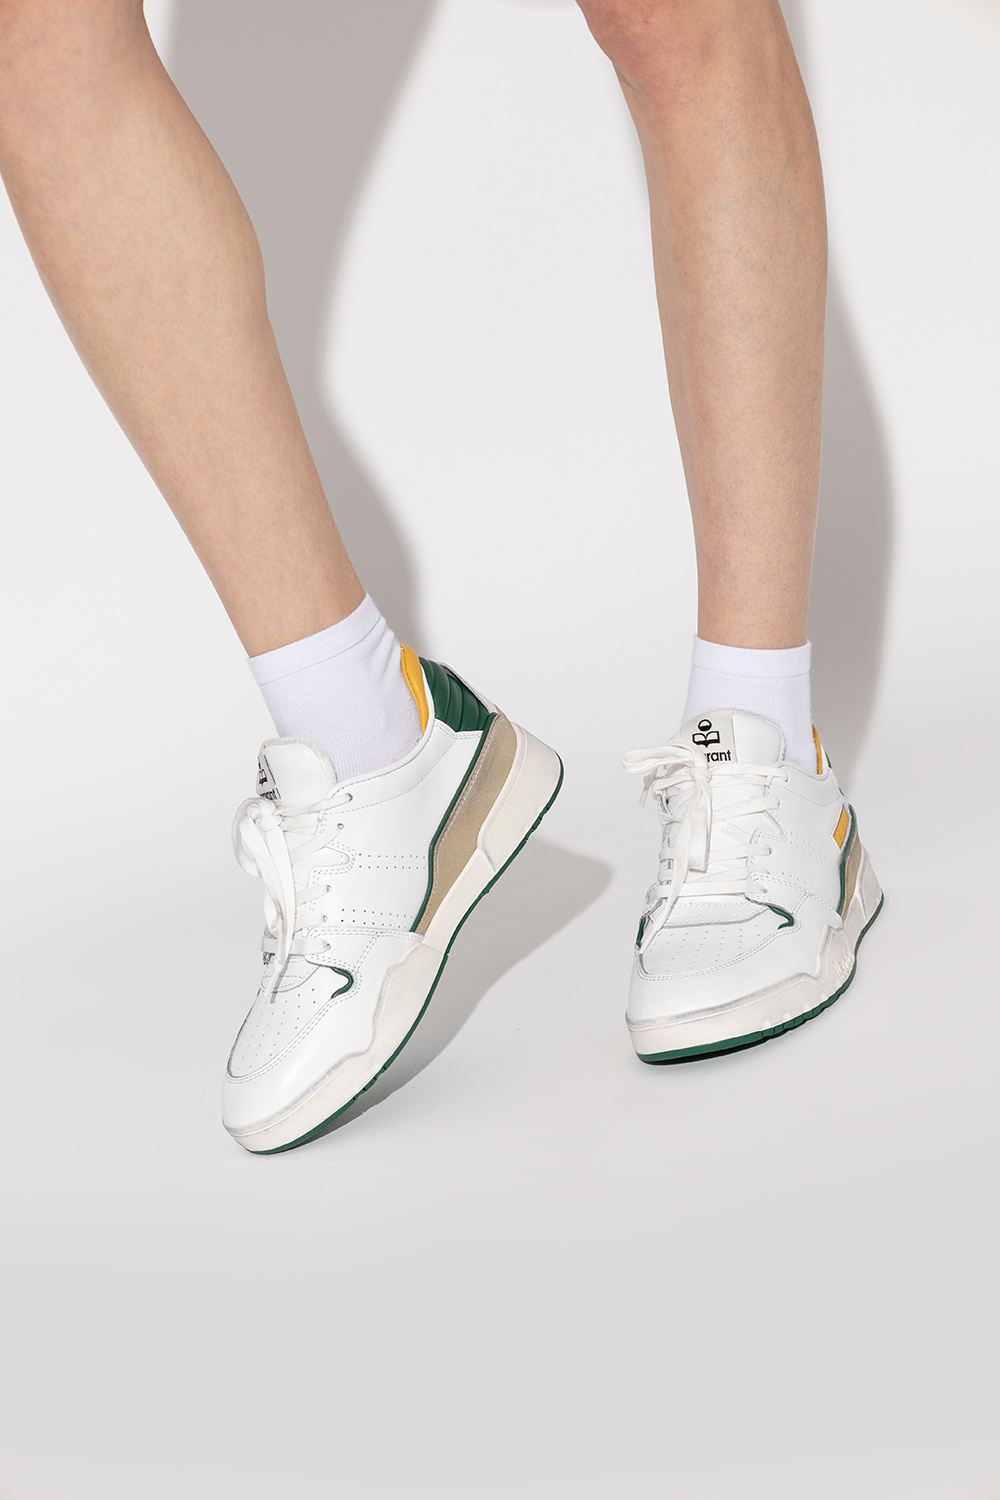 Isabel Marant ‘Emree’ sneakers